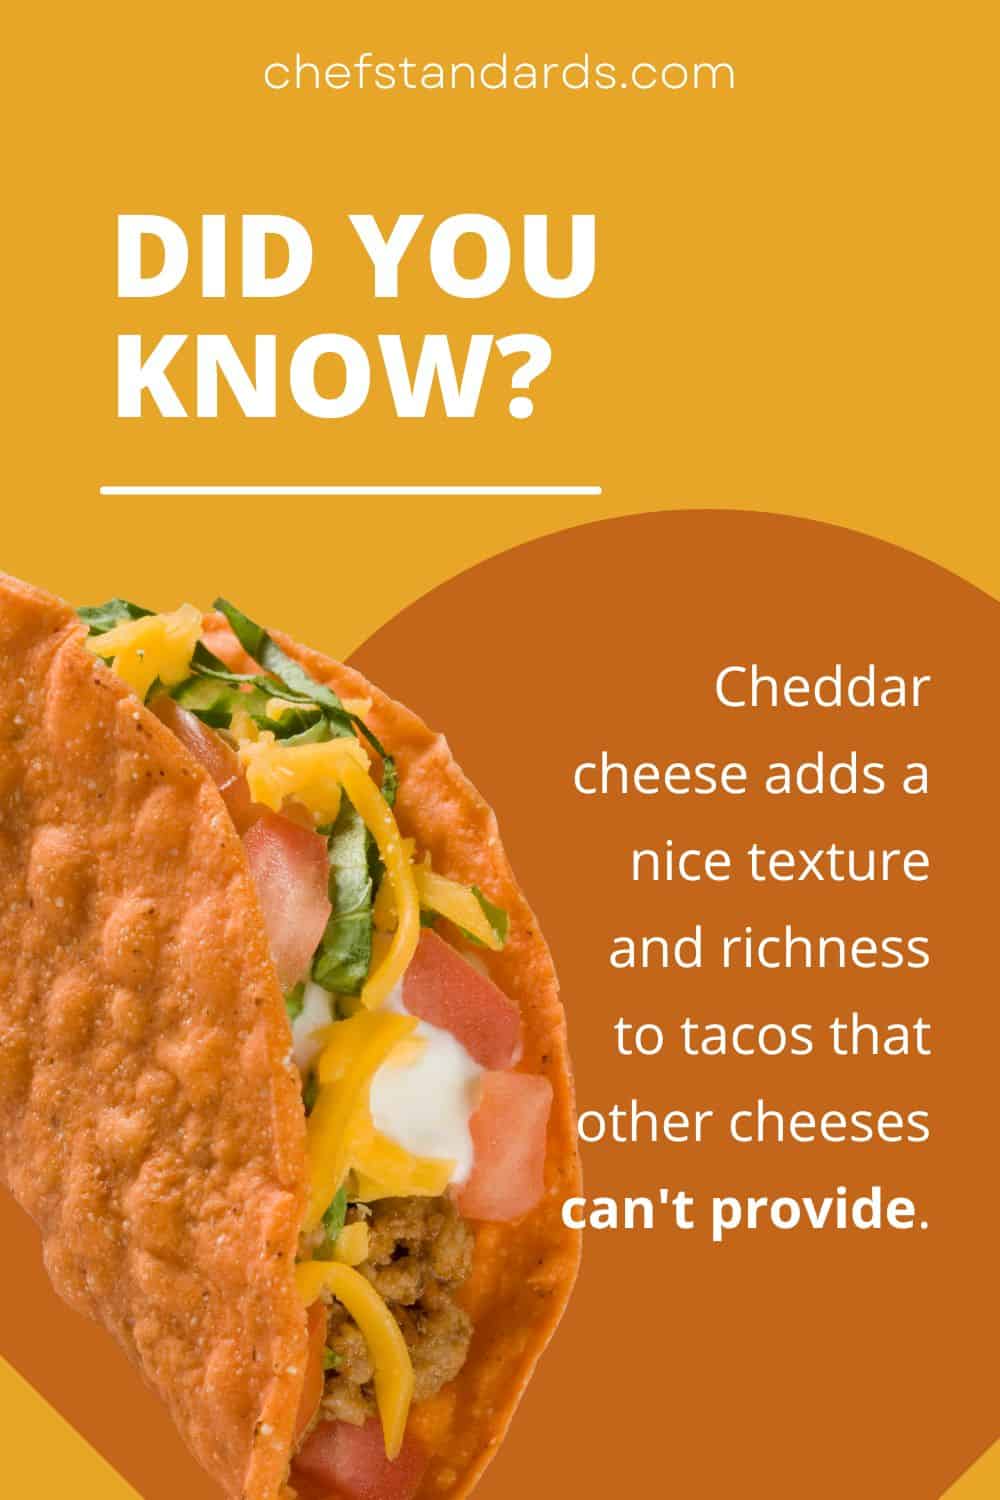 Cheddar cheese illustration